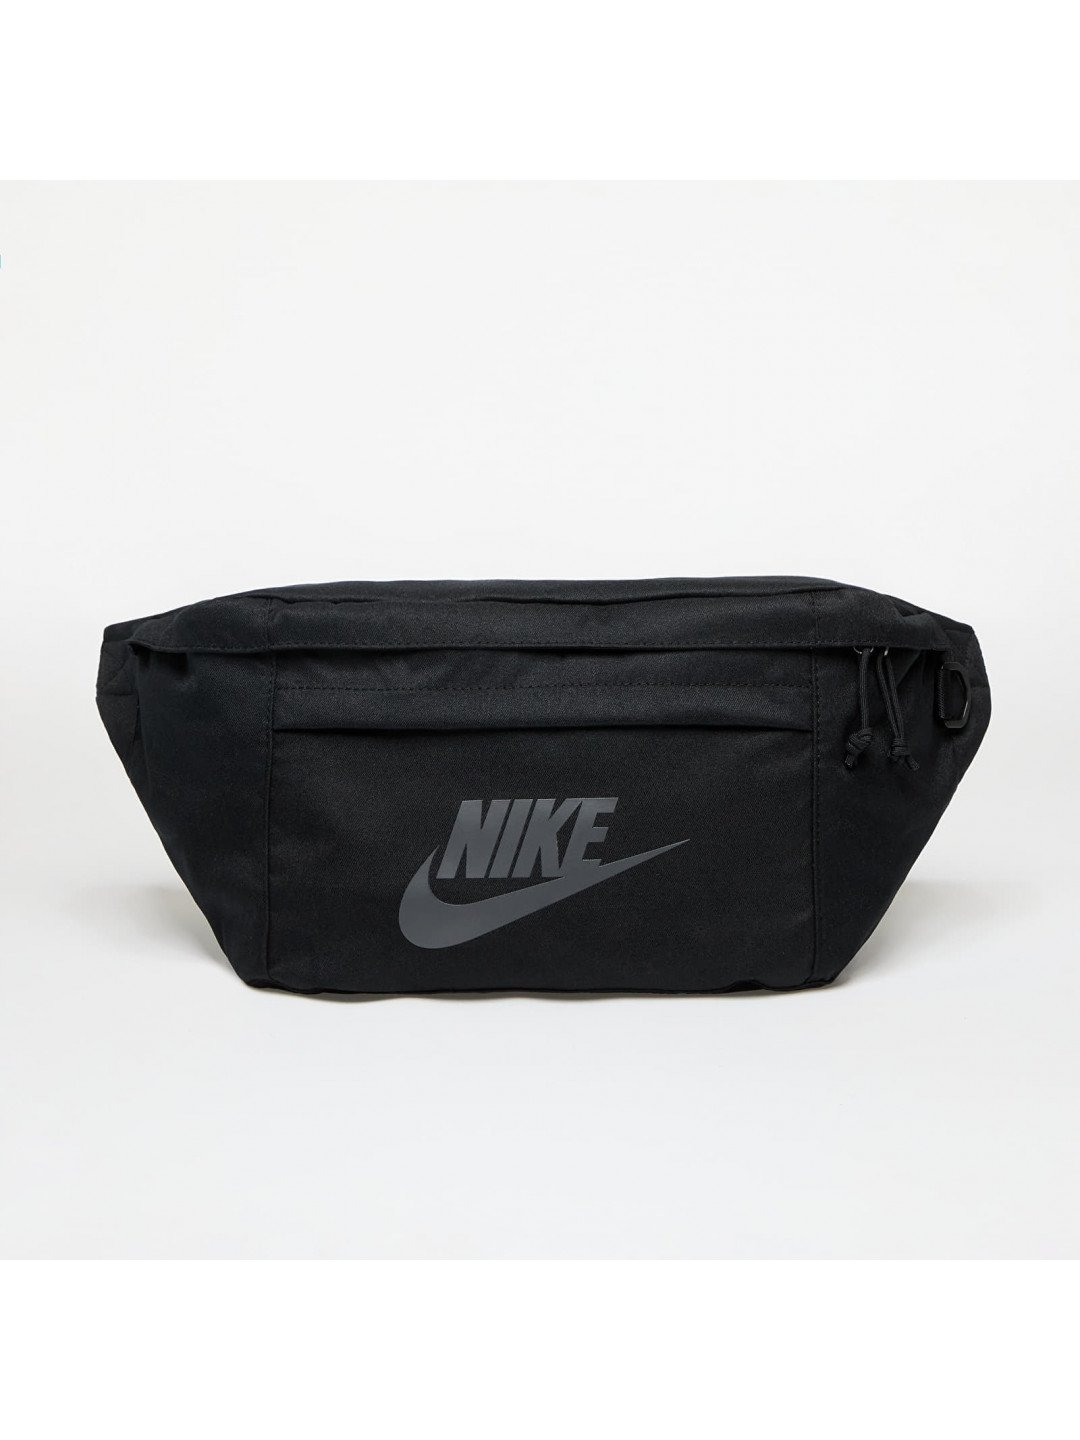 Nike Nike Tech Hip Pack Black Black Anthracite